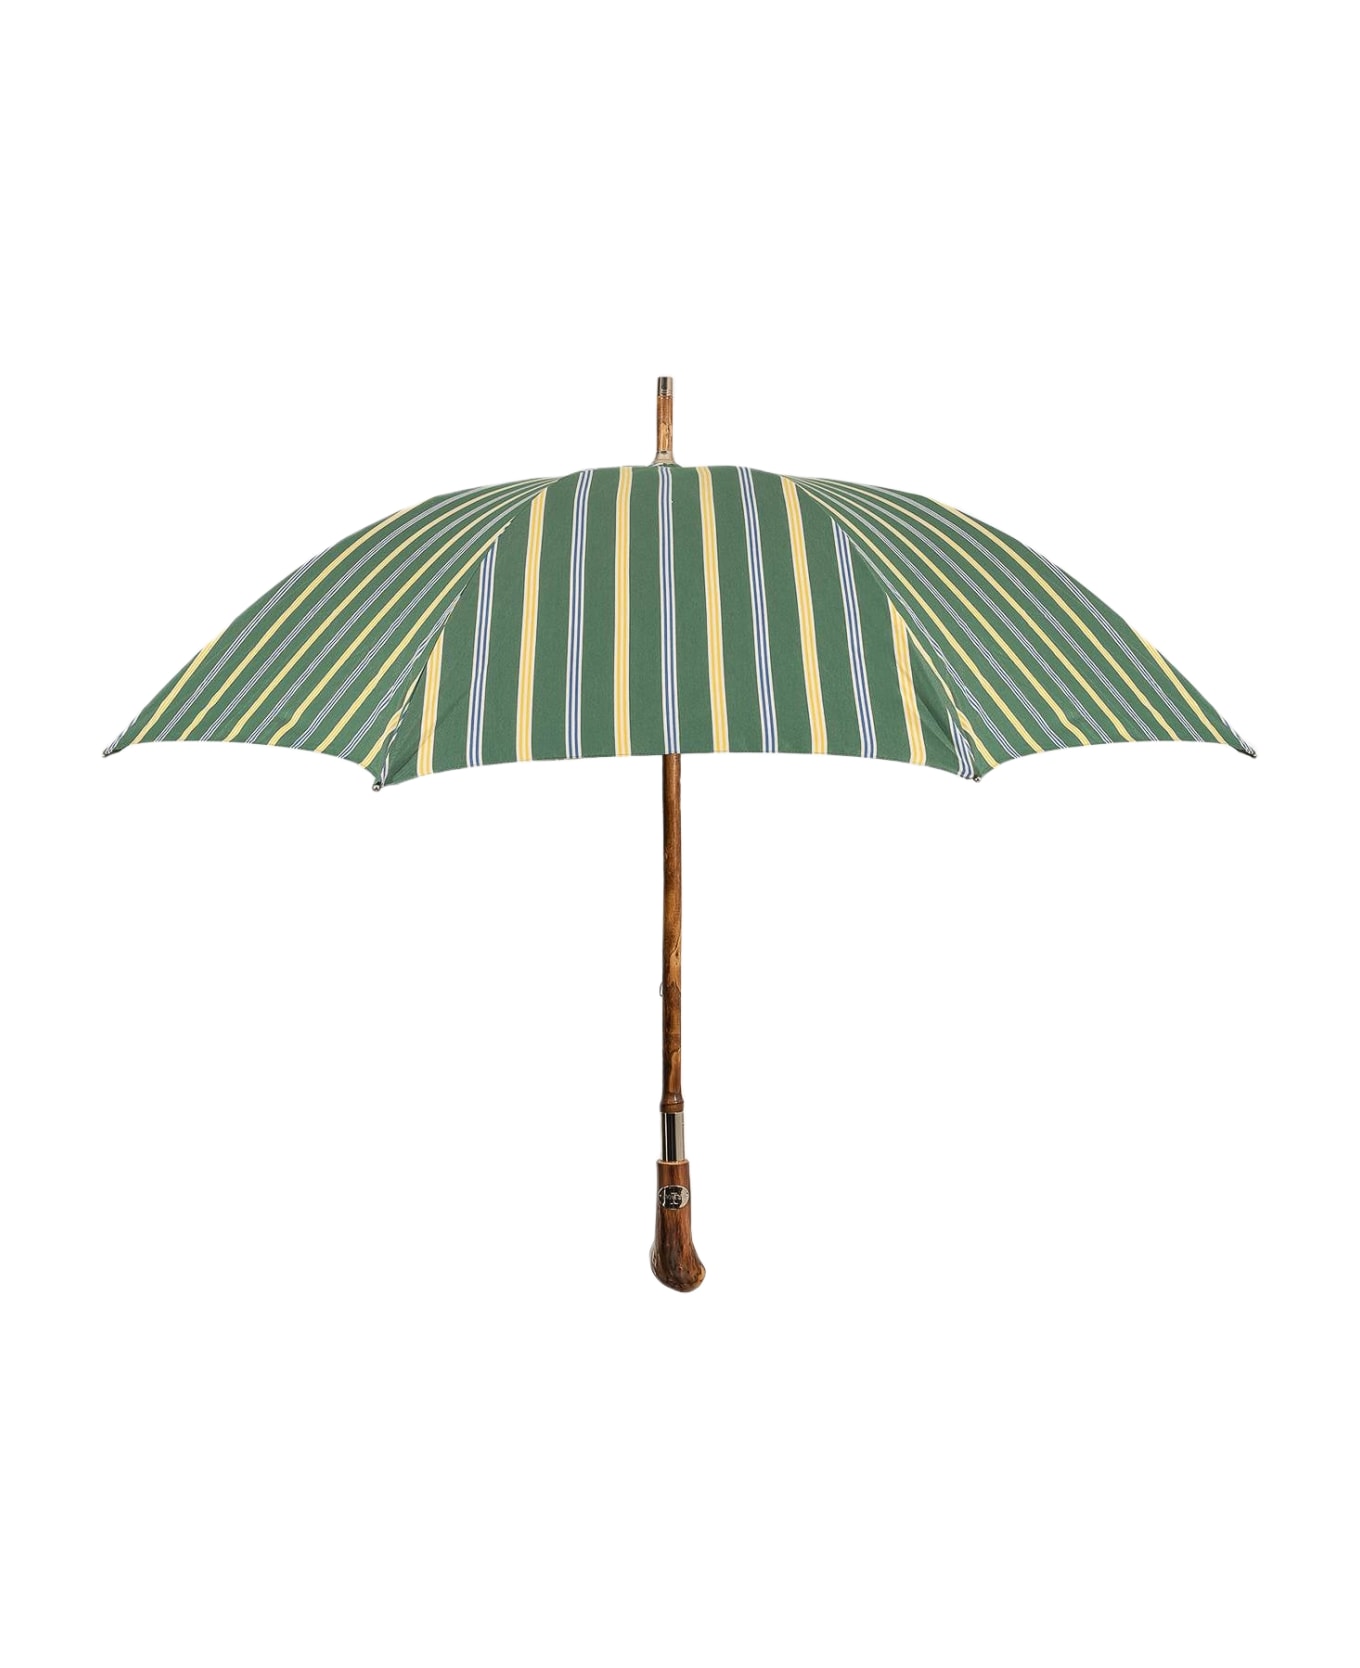 Larusmiani Umbrella 'pic Nic' Umbrella - Green 傘